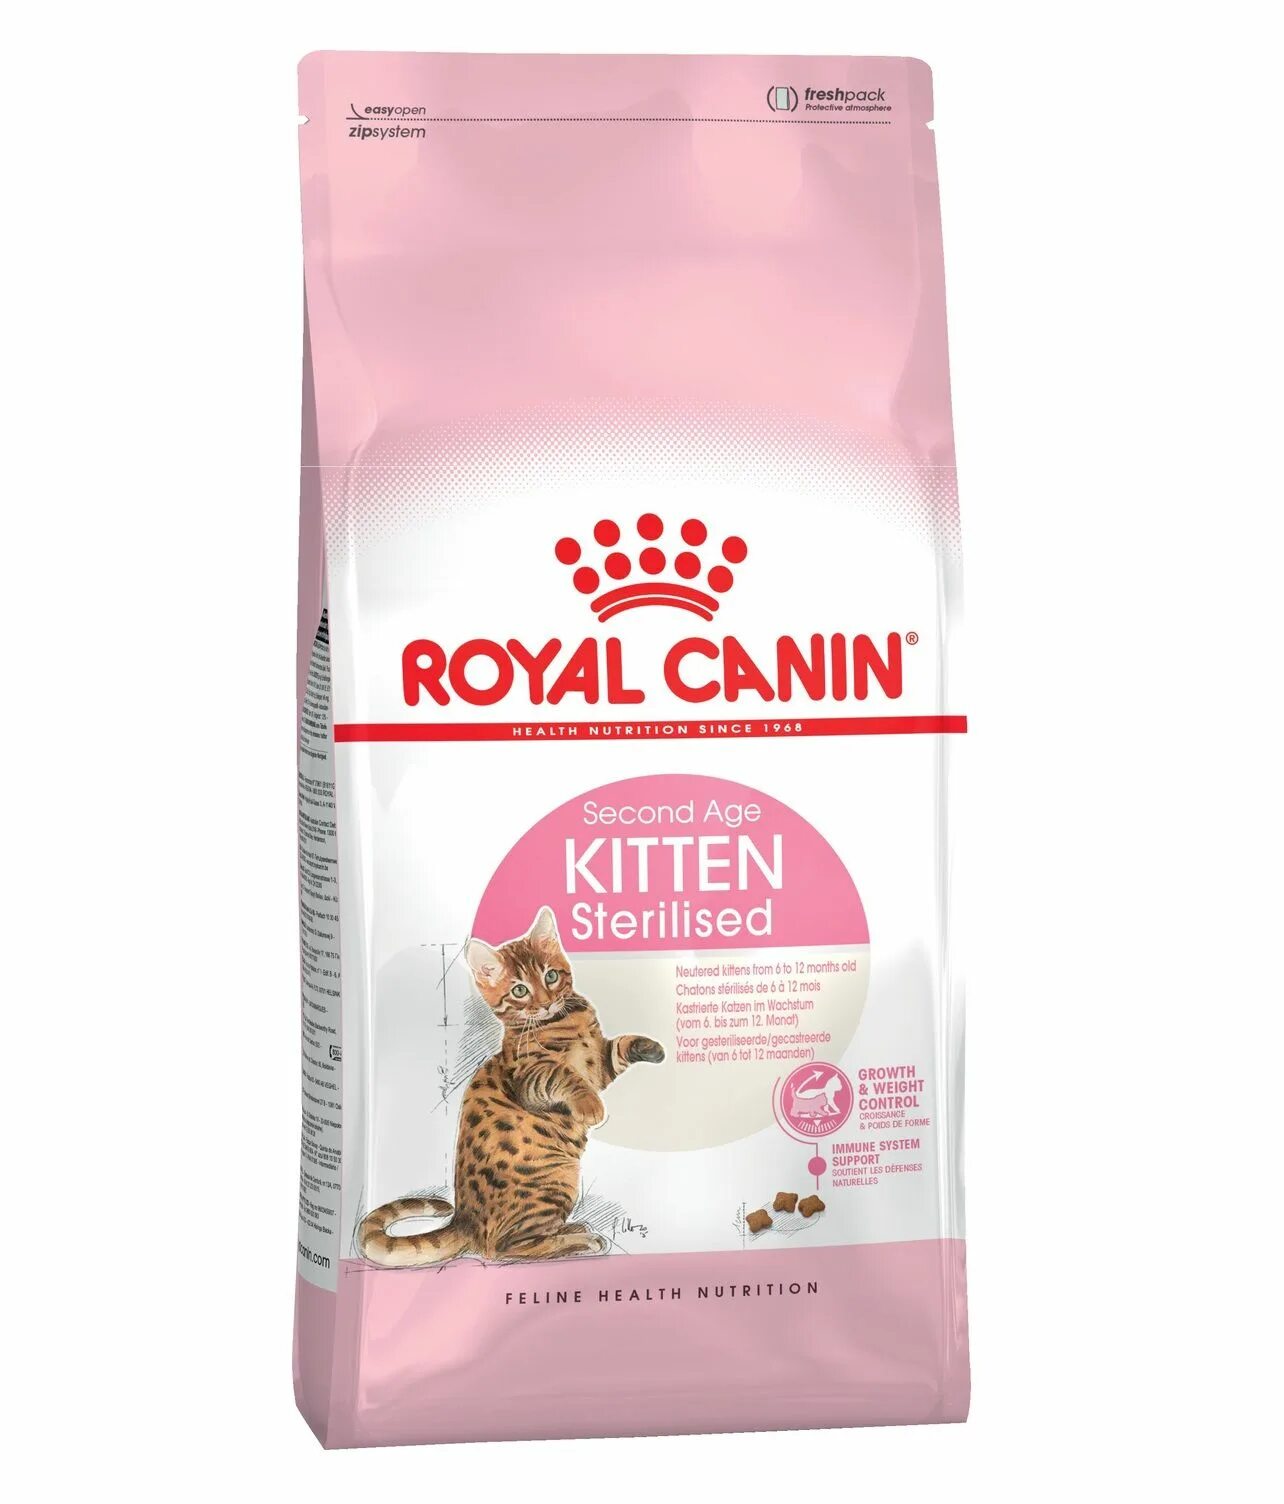 Royal Canin Kitten до 12 месяцев 400 гр. Сухой корм для котят от 6 месяцев Royal Canin Kitten Sterilised. Сухой корм для кошек Royal Canin для британских короткошерстных. Сухой корм для стерилизованных котят до 12 месяцев.